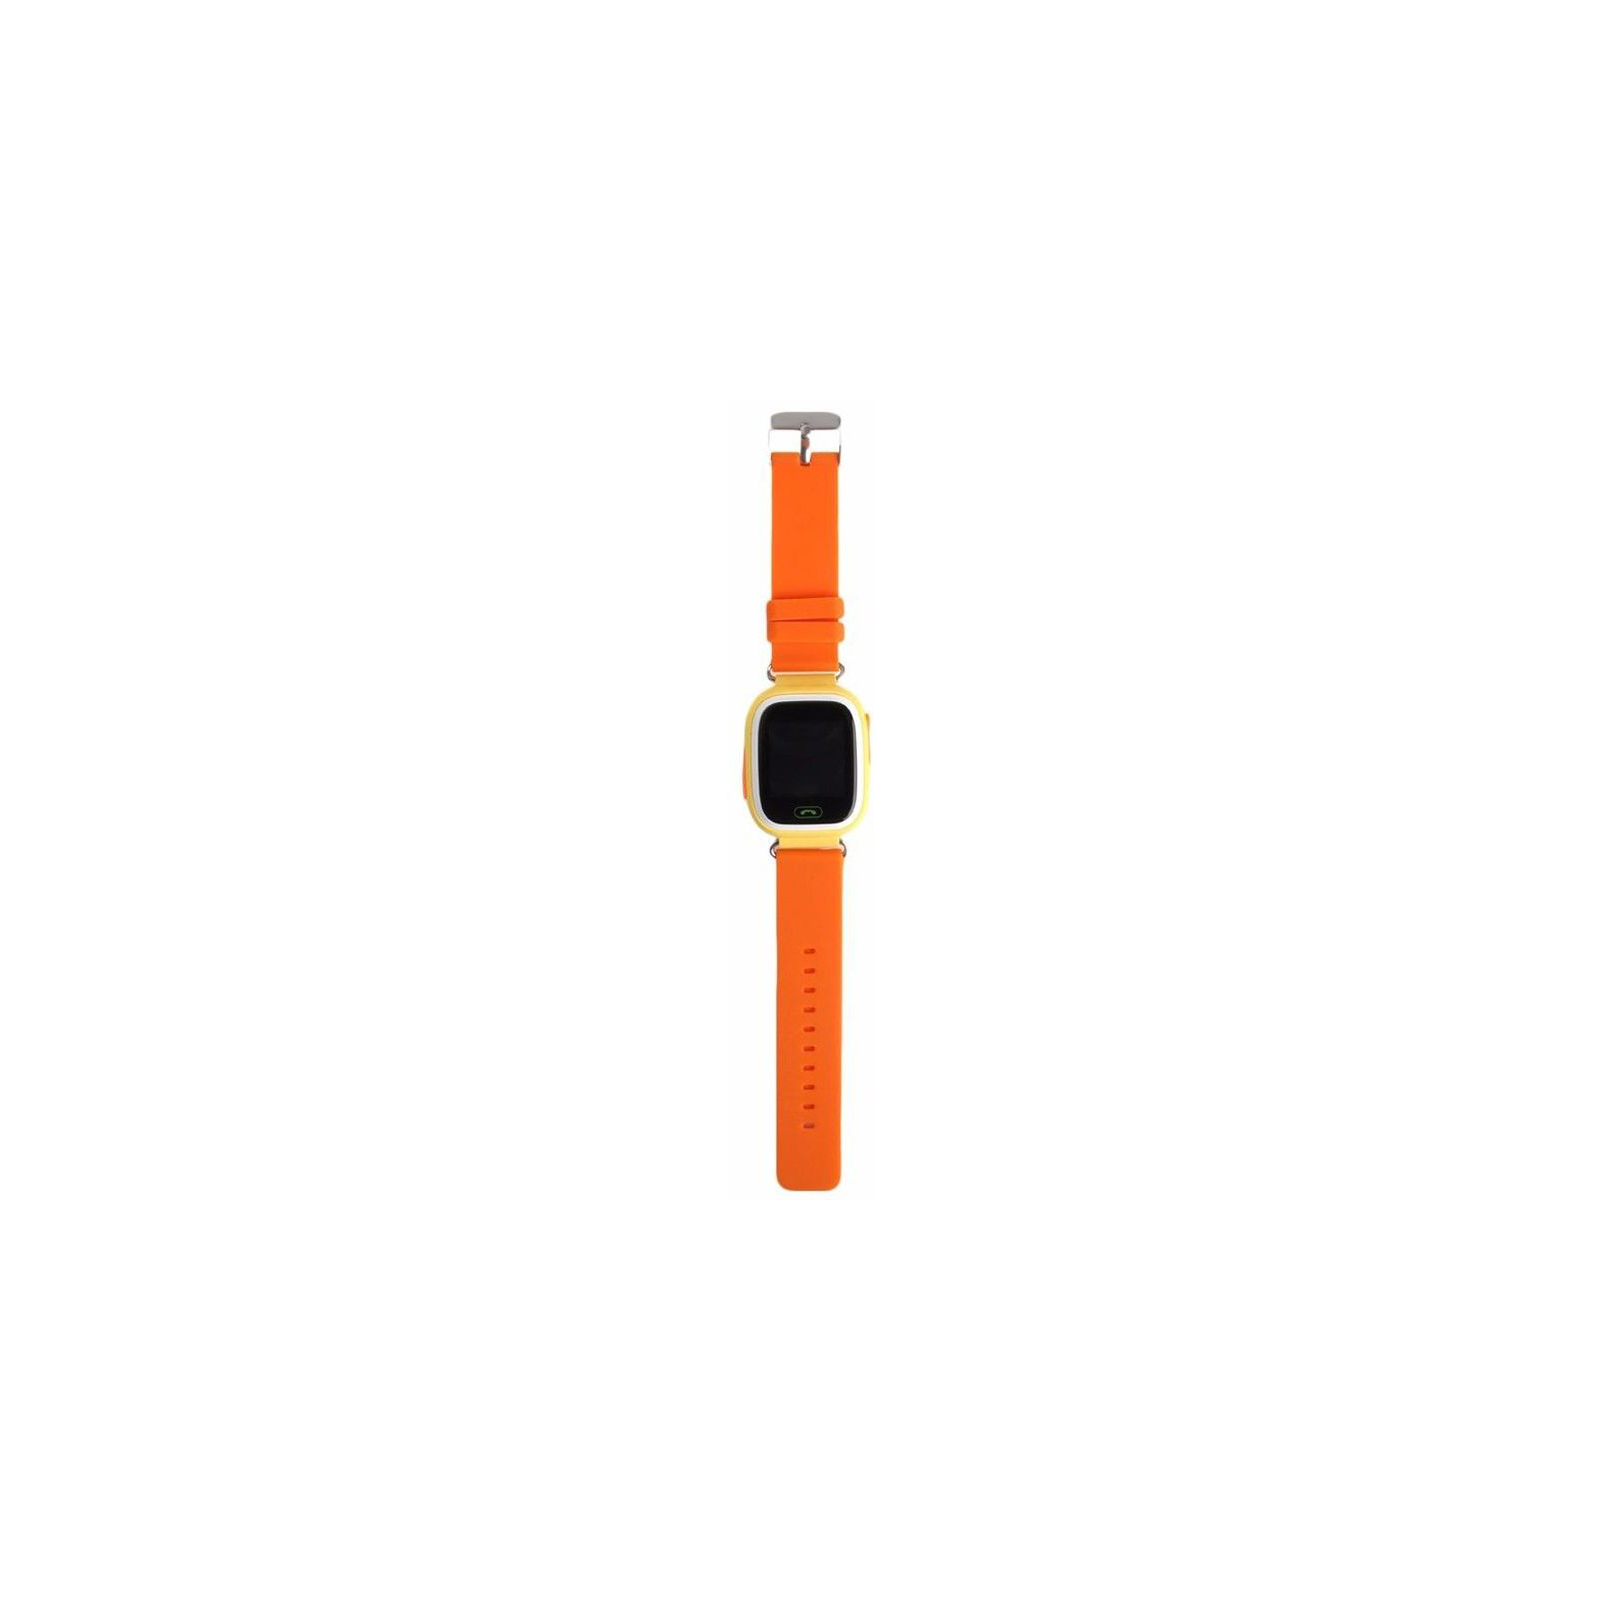 Смарт-часы UWatch Q90 Kid smart watch Blue (F_47453) изображение 3